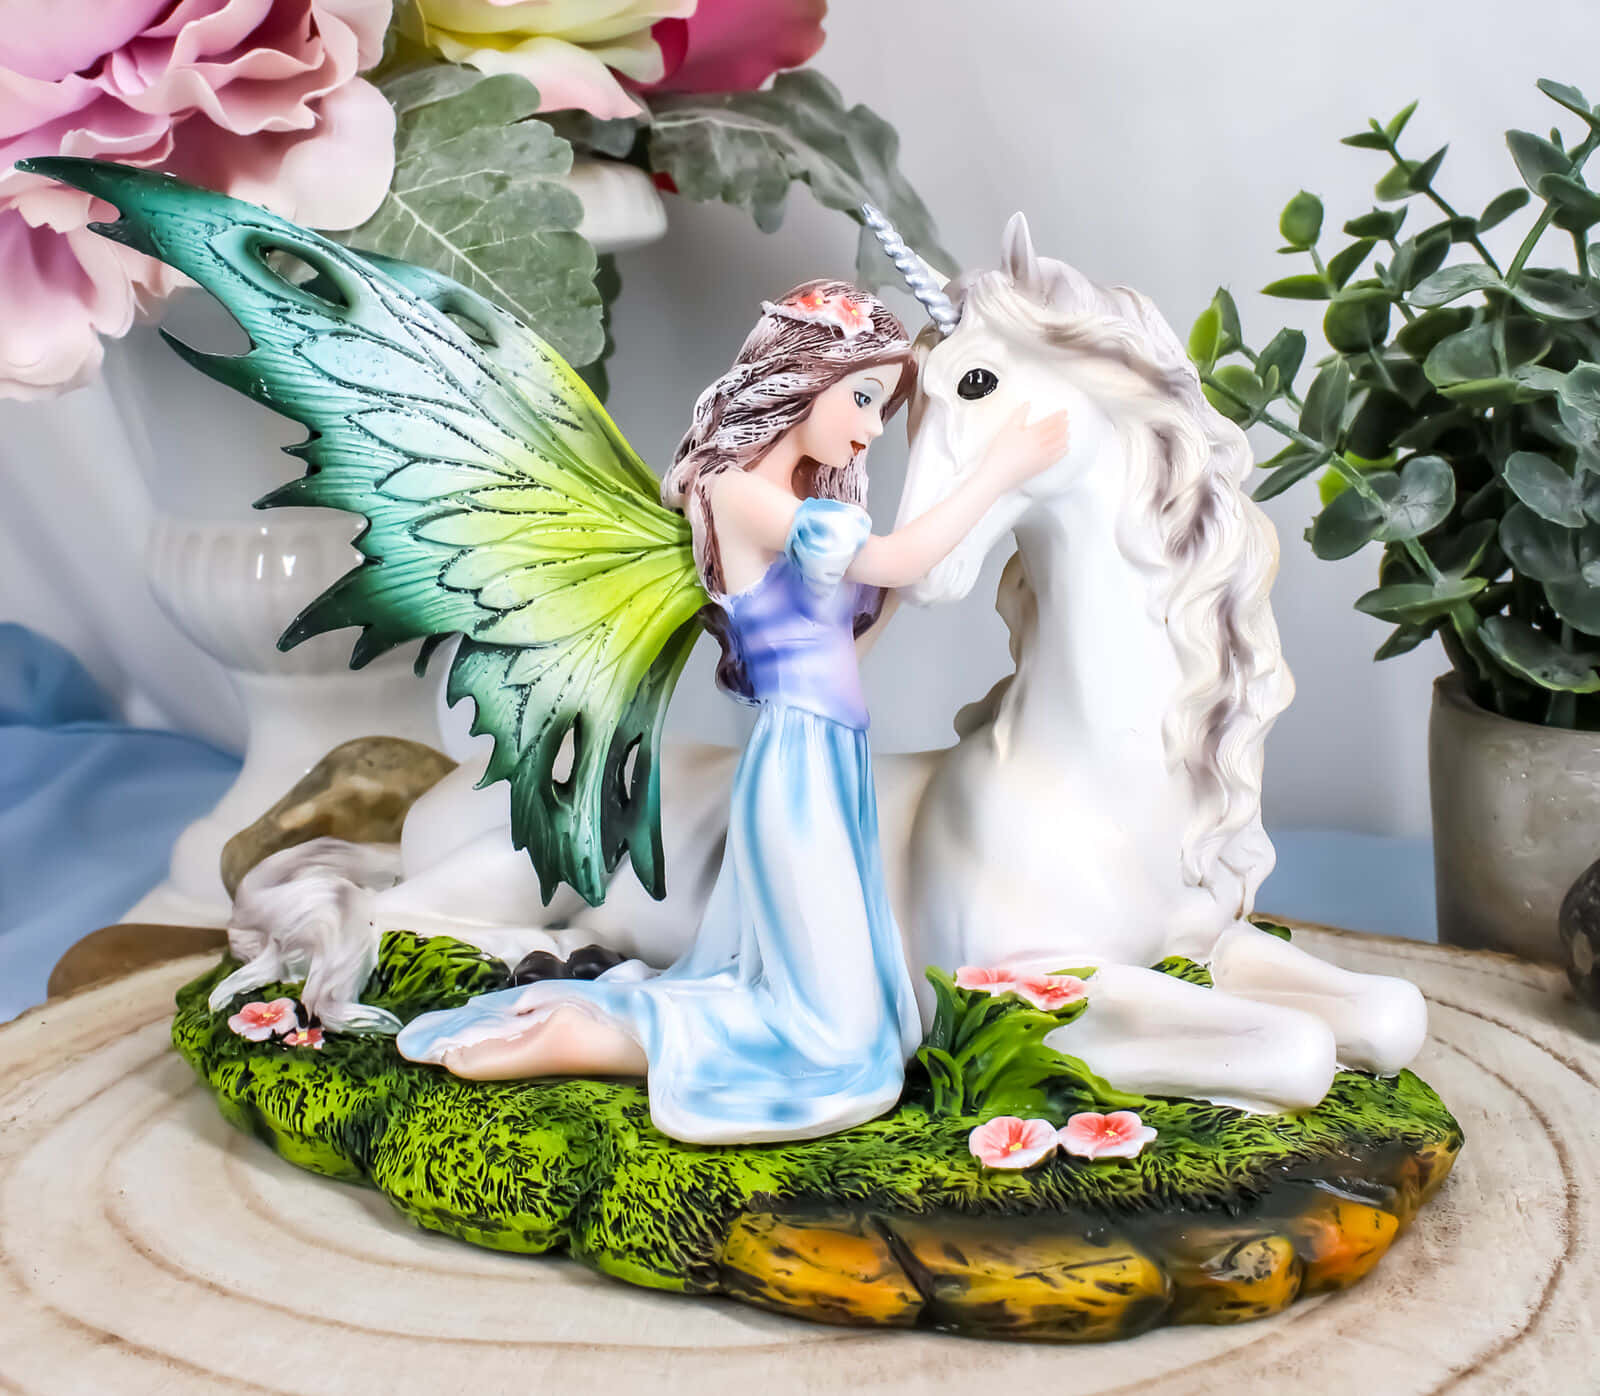 Preciosafigura De Unicornio, Imagen De Una Princesa Hada